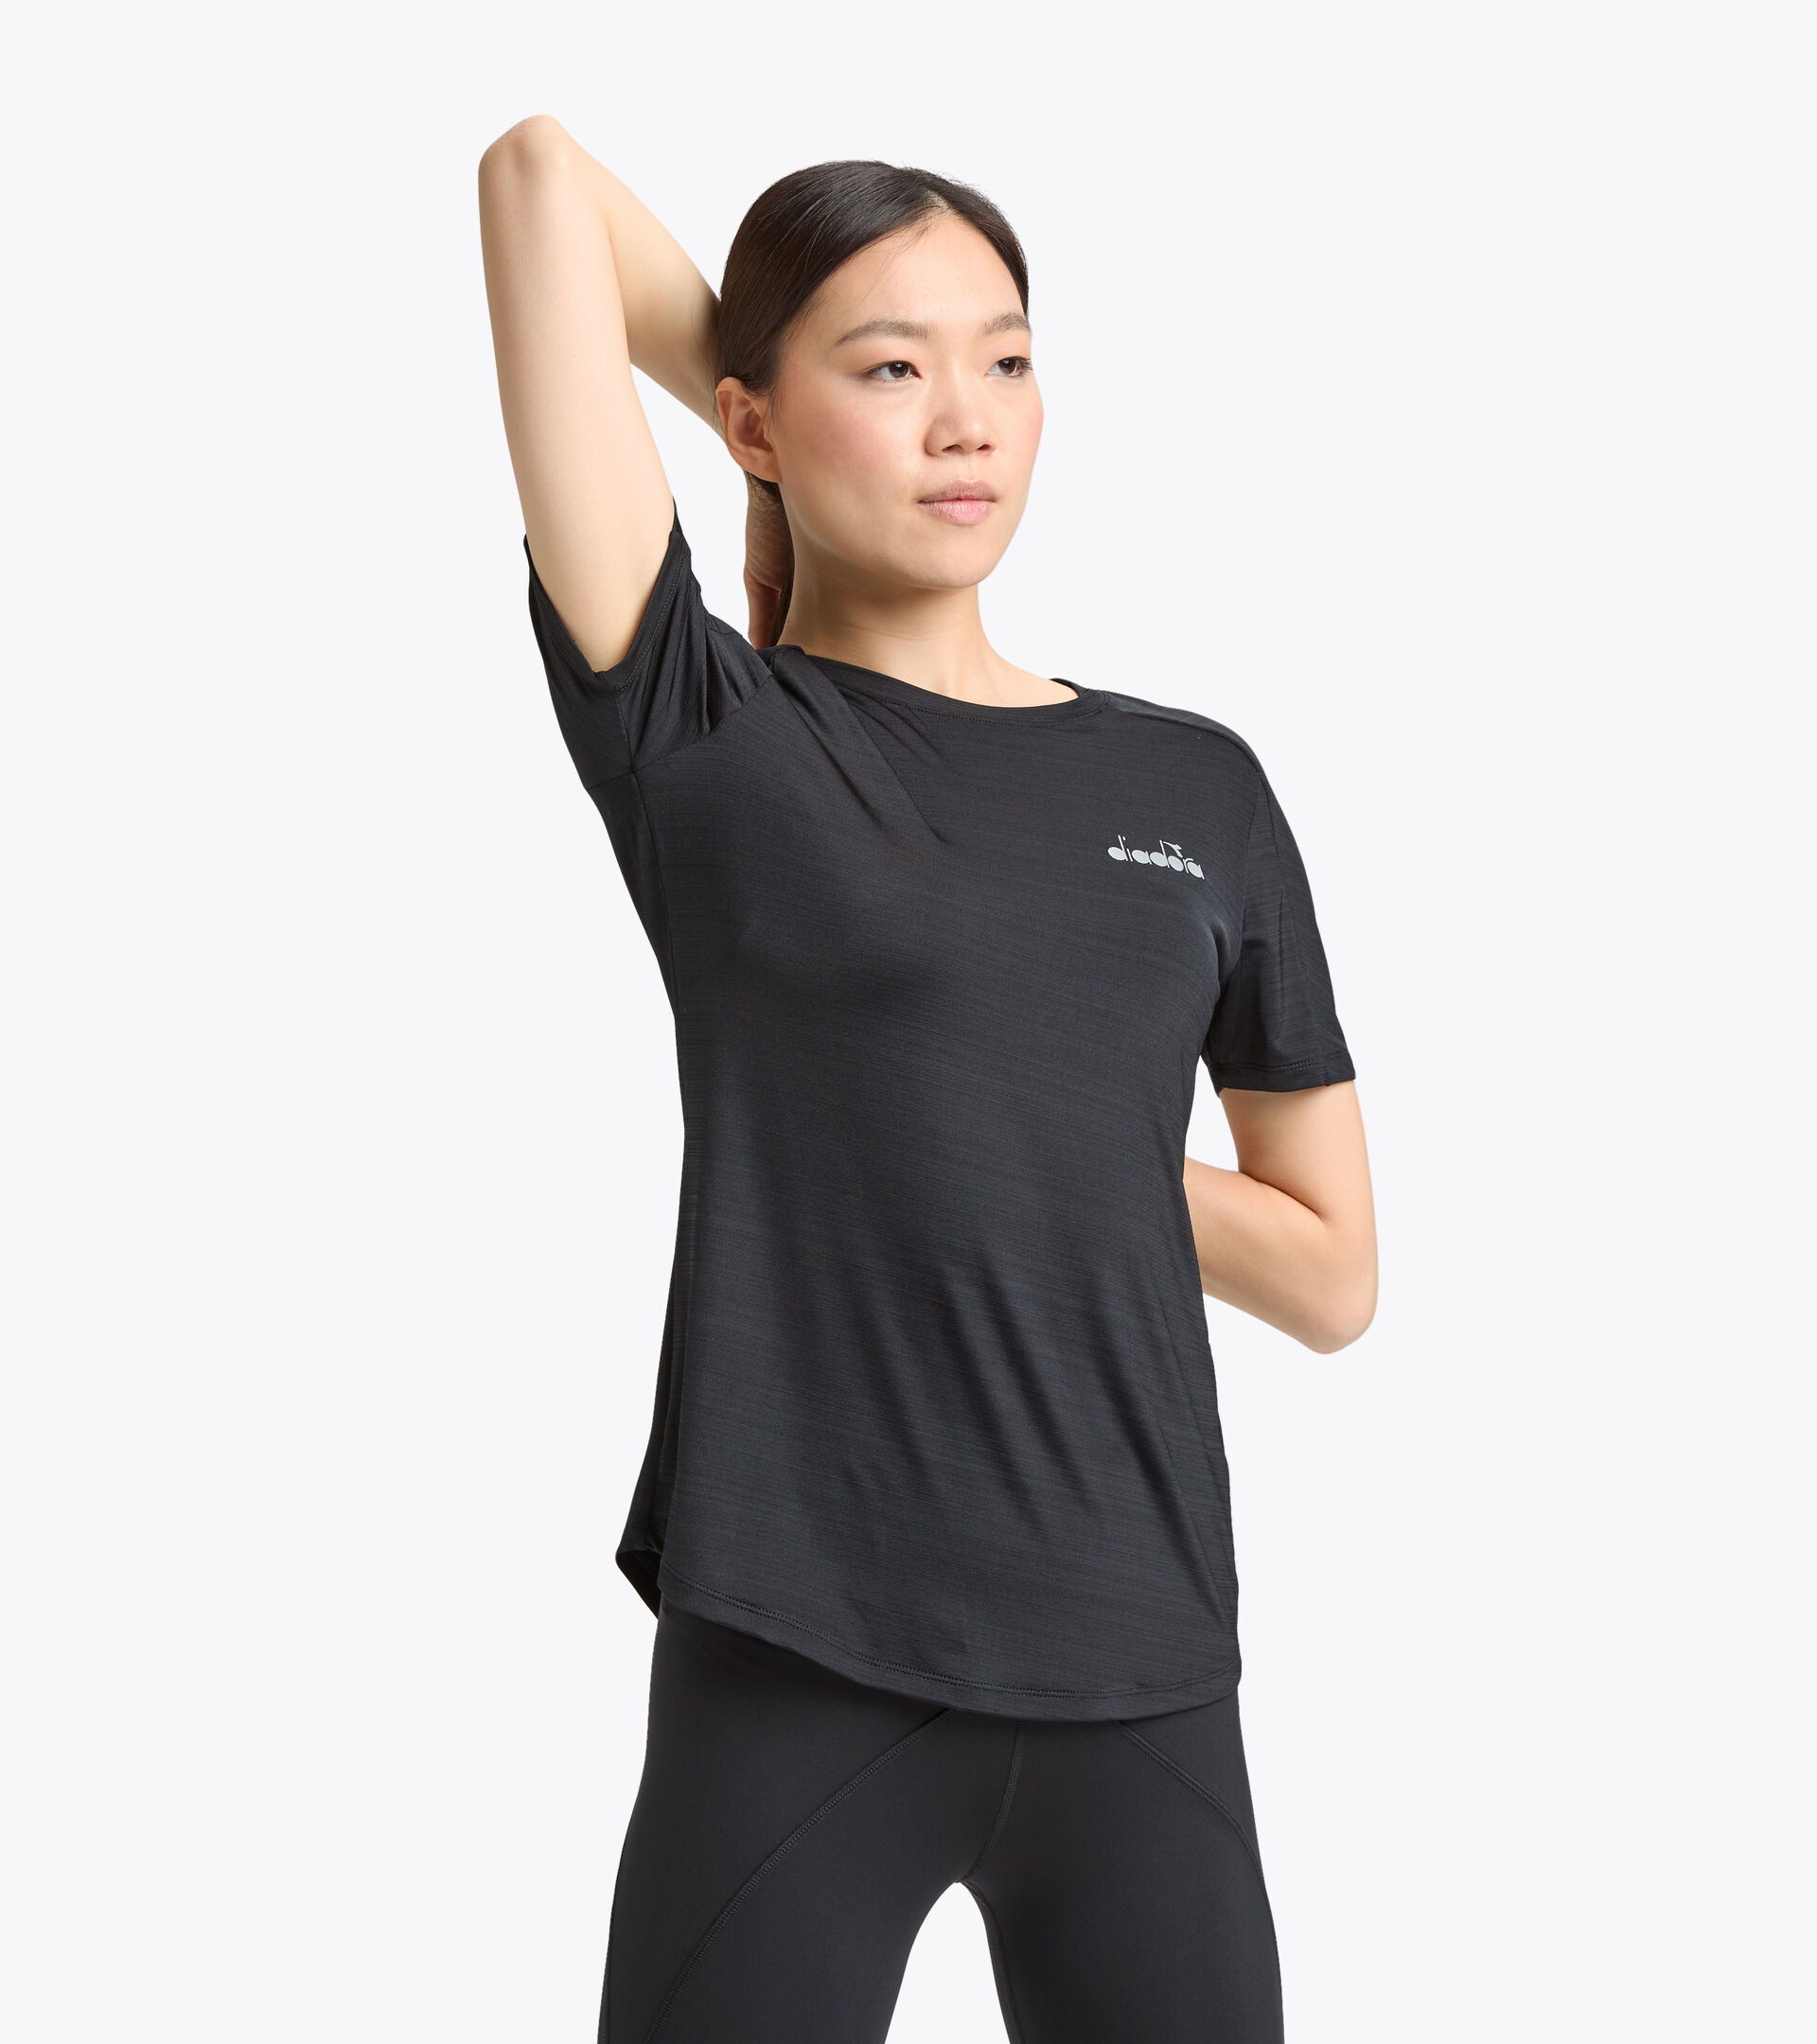 L. SS T-SHIRT BE ONE FT Camiseta para entrenar - Mujer - Tienda en línea  Diadora UZ